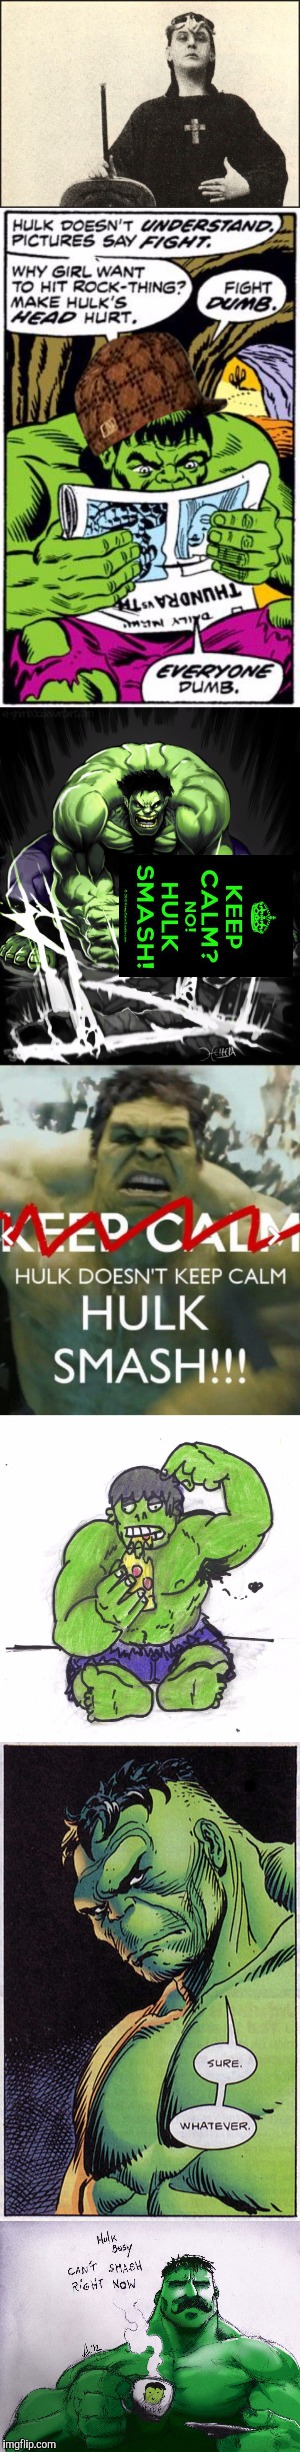 IMG FLIP SAFE. HULK' FRIENDS SAFE...Hulk say: NO MORE SMASH. Hulk on R&R. | . | image tagged in aleister crowley en equip,scumbag associates,scumbag illuminati,scumbag hulk,hulk no more smash,memes | made w/ Imgflip meme maker